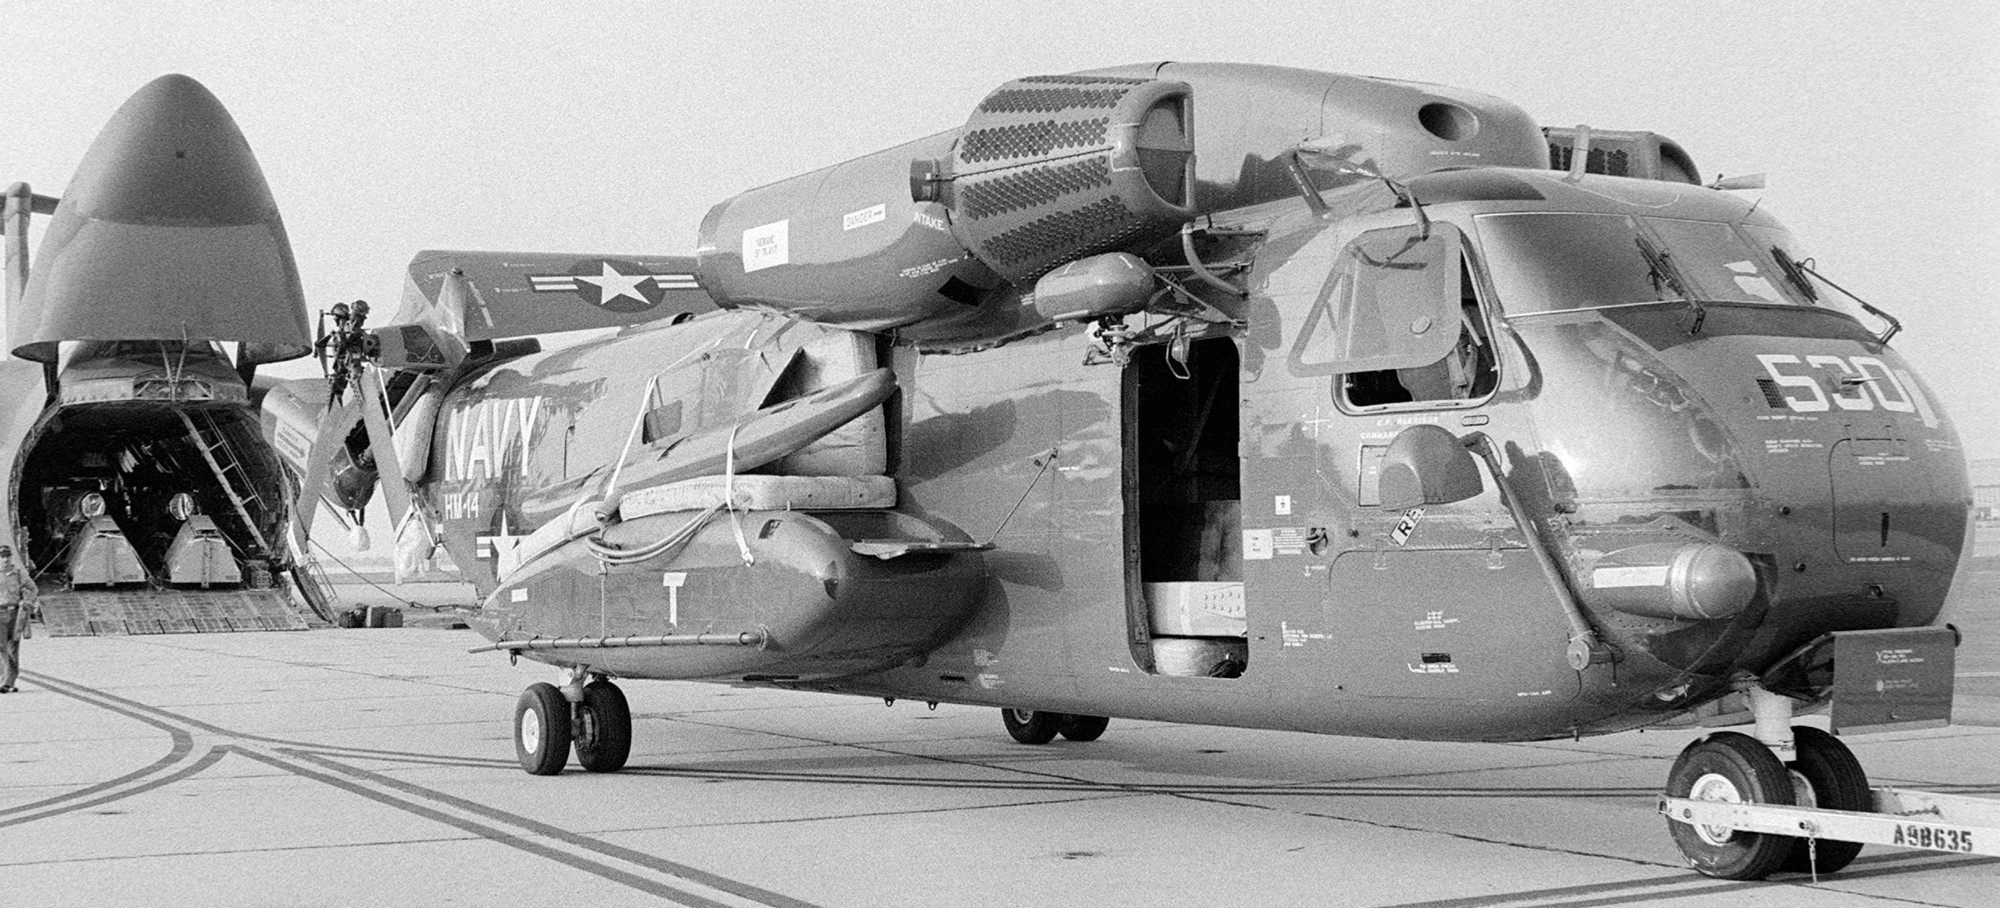 hm-14 vanguard helicopter mine countermeasures squadron navy rh-53d sea stallion 119